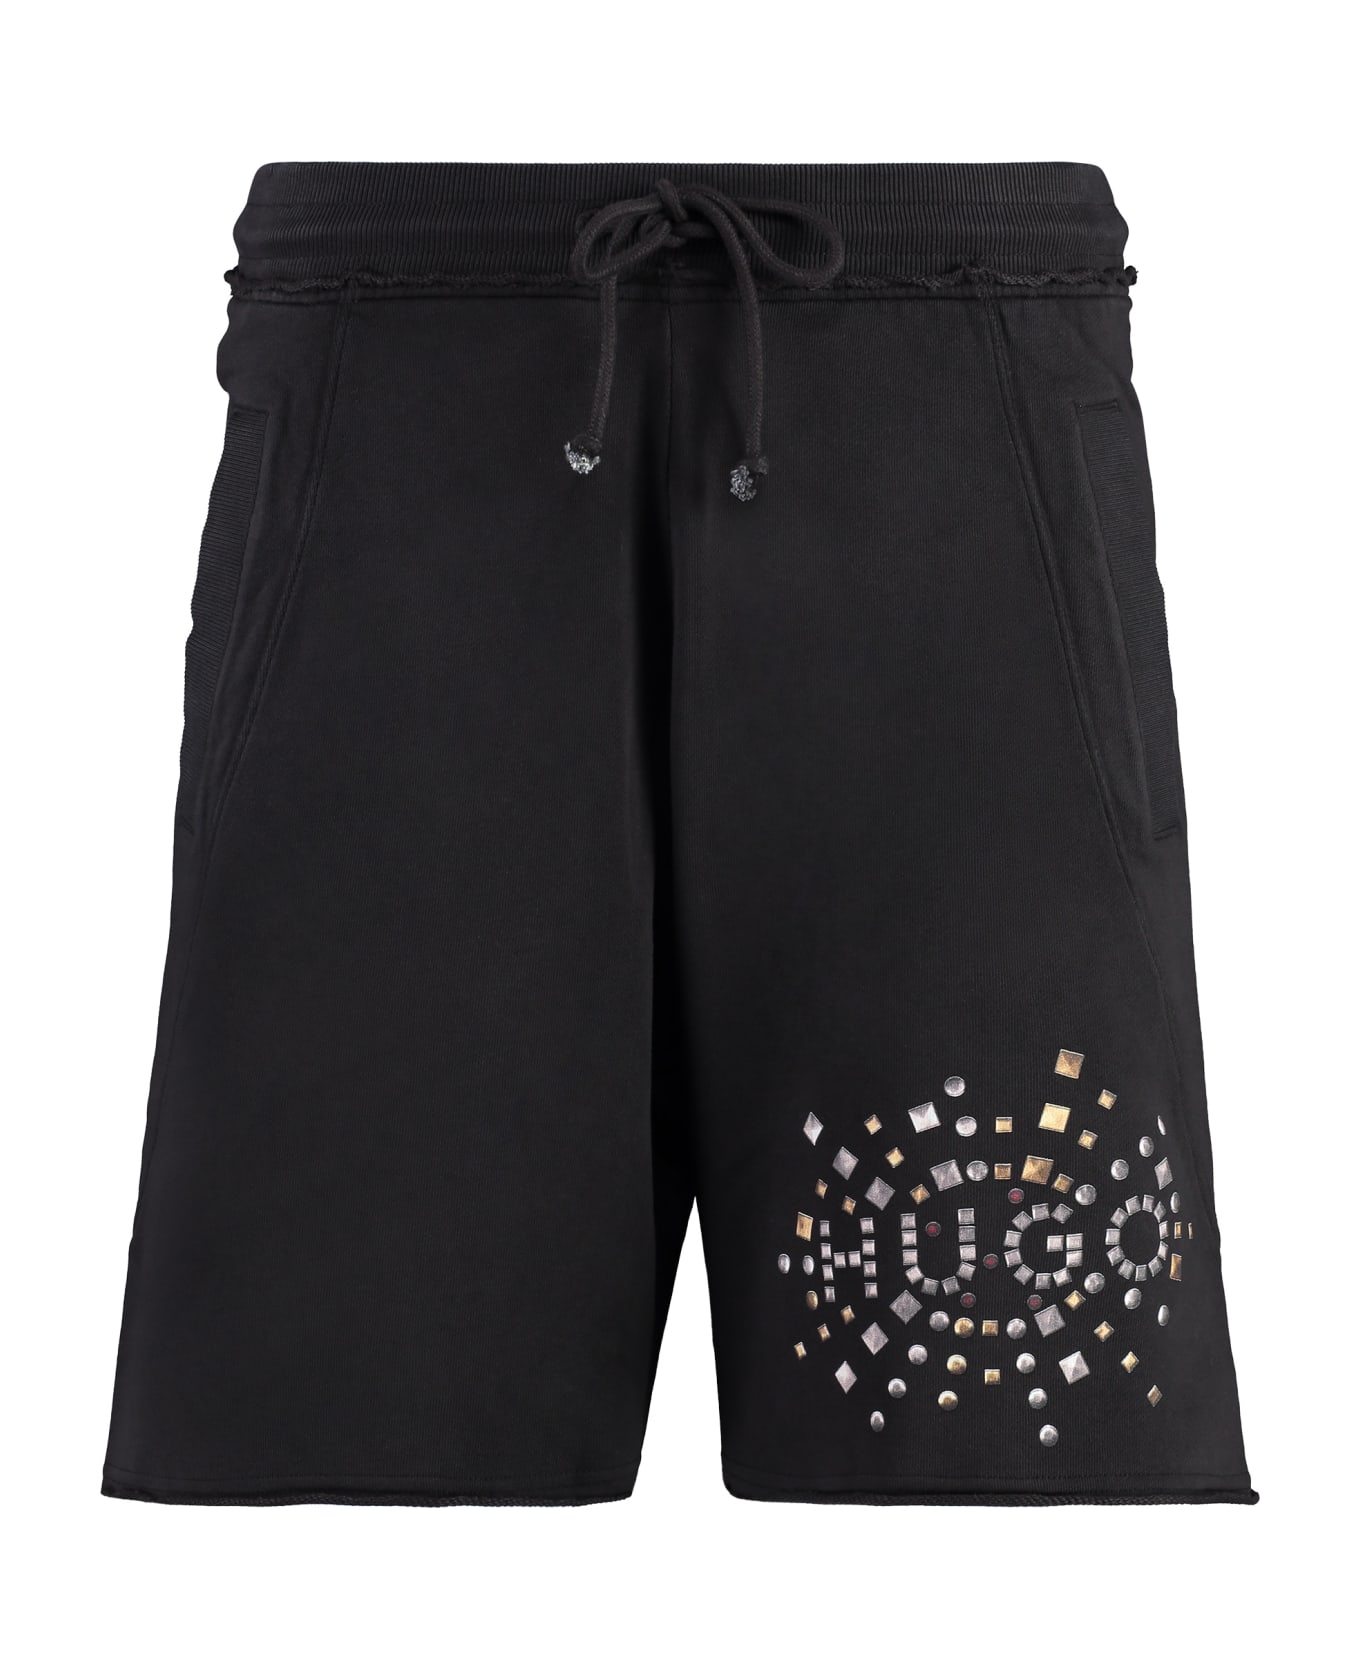 Hugo Boss Cotton Bermuda Shorts - black